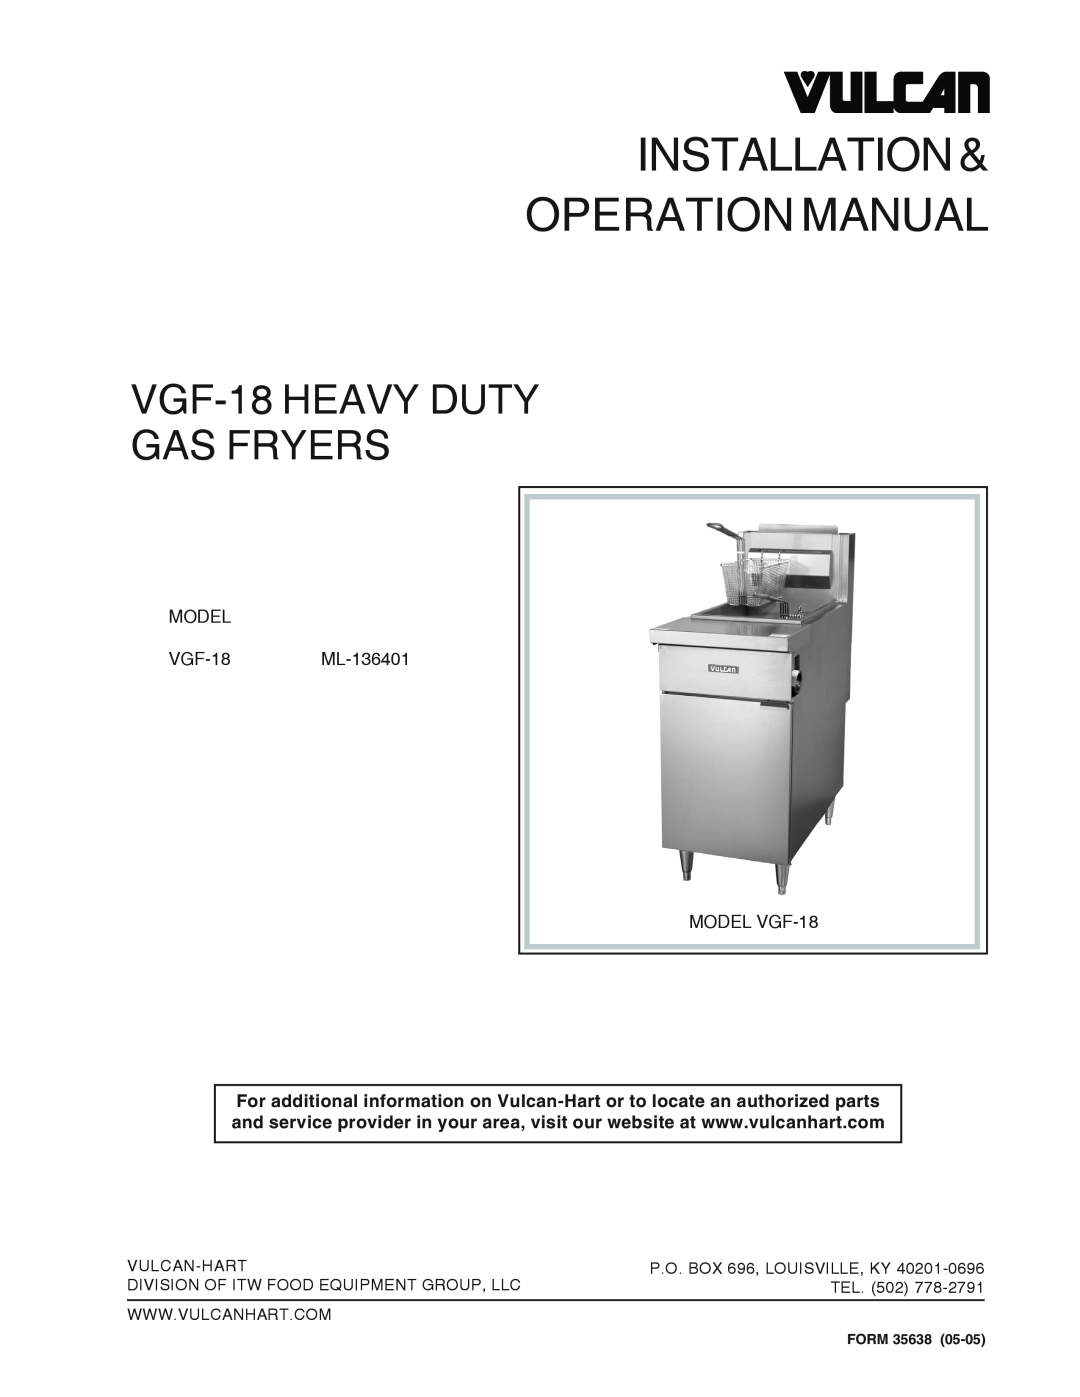 Vulcan-Hart operation manual VGF-18HEAVY DUTY GAS FRYERS, MODEL VGF-18 ML-136401 MODEL VGF-18, Vulcan-Hart, Tel, Form 